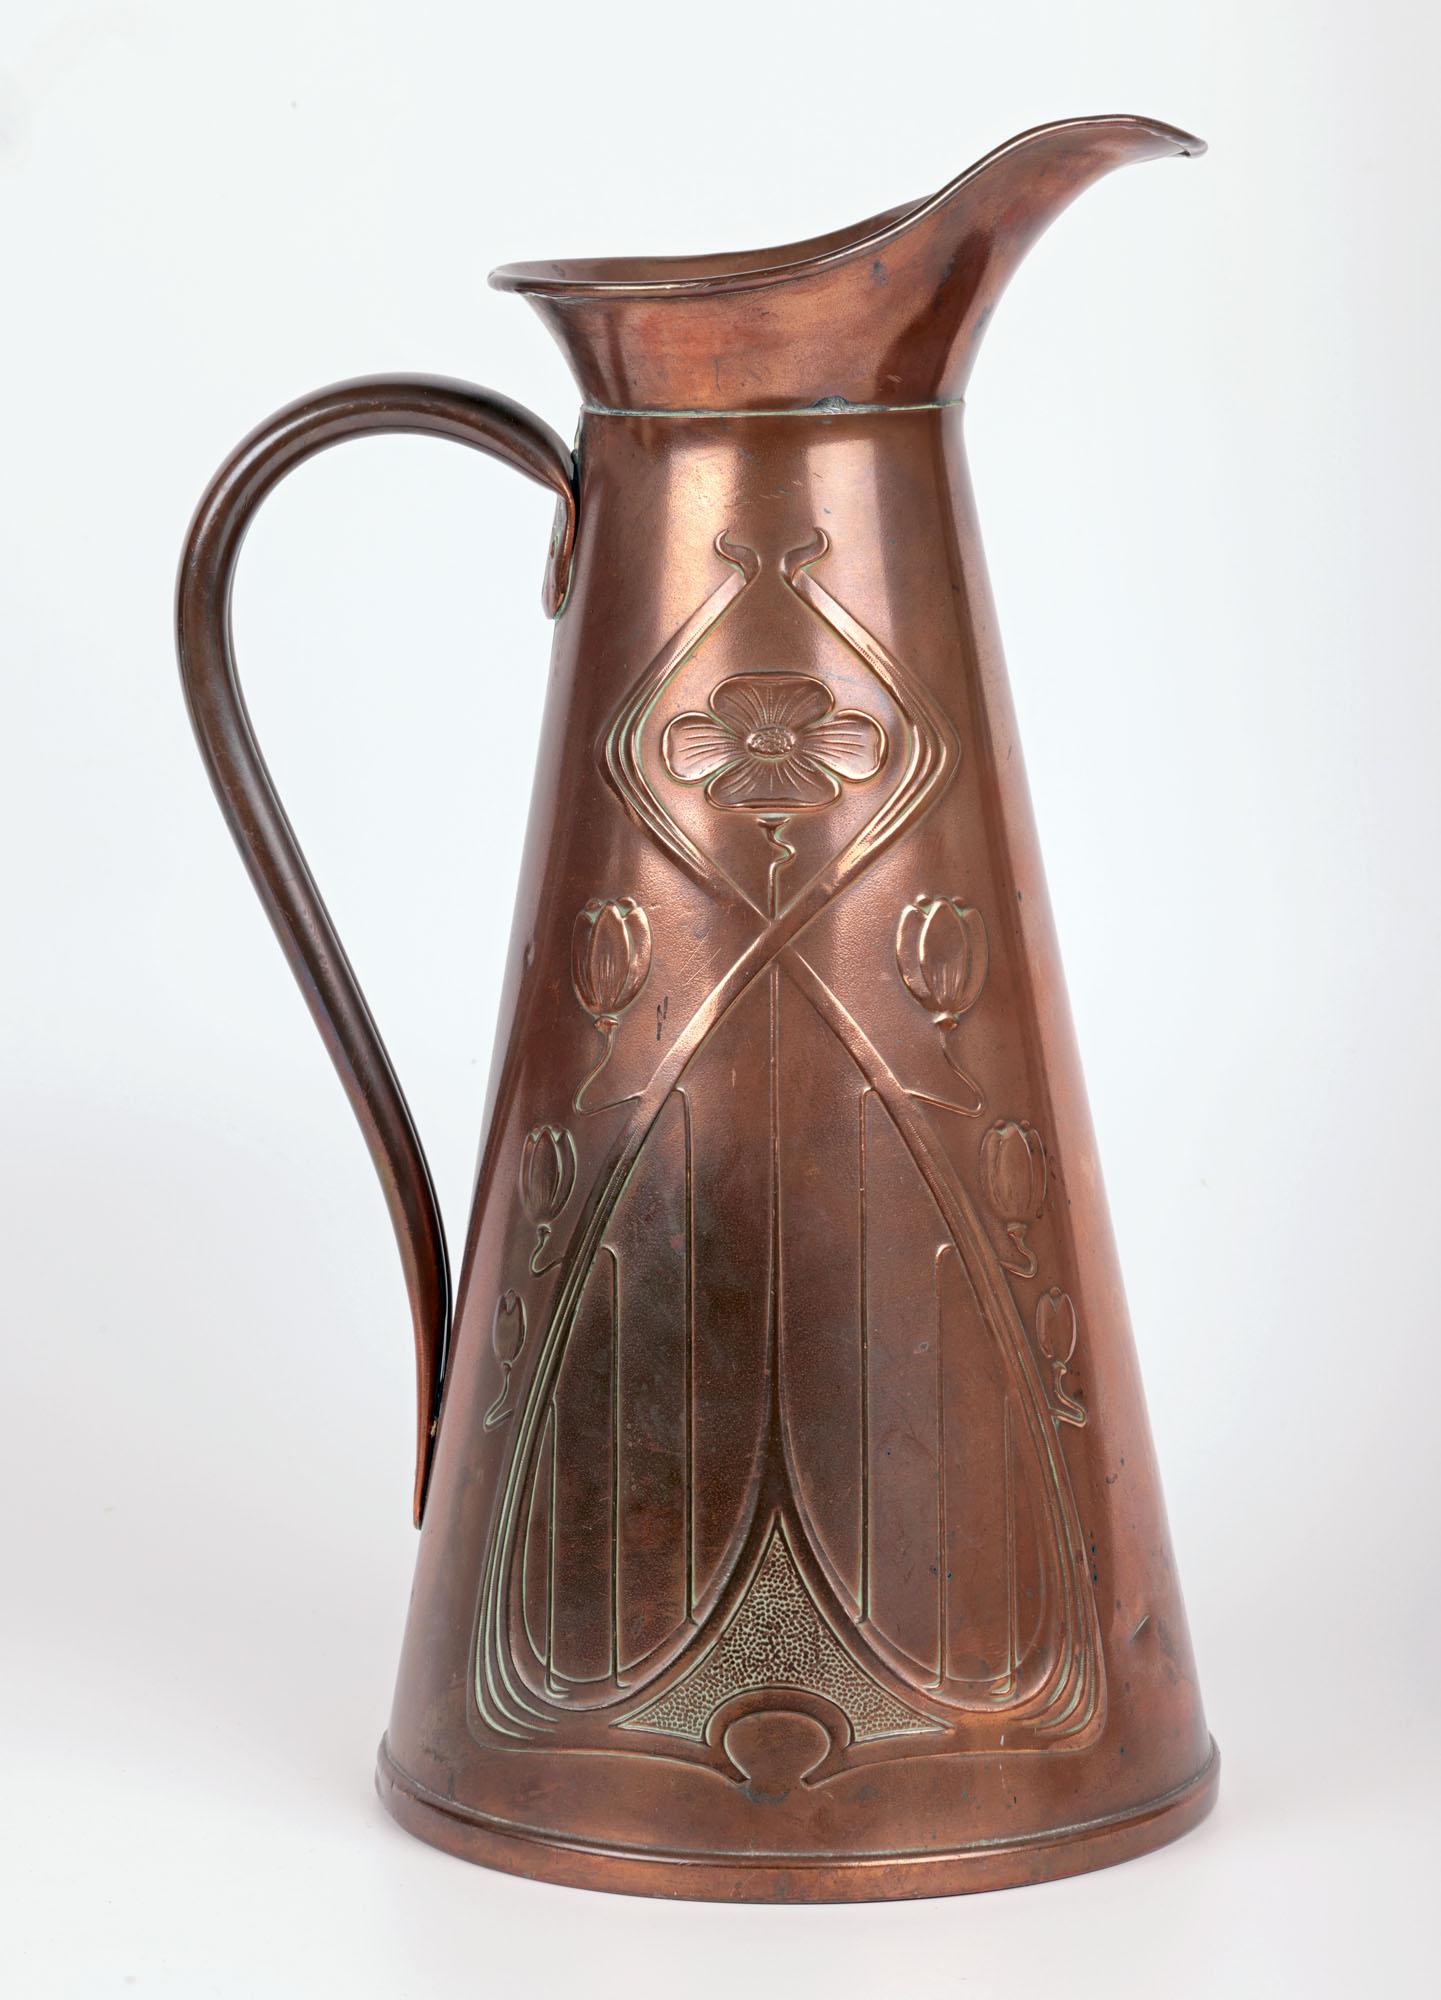 joseph sankey copper jug